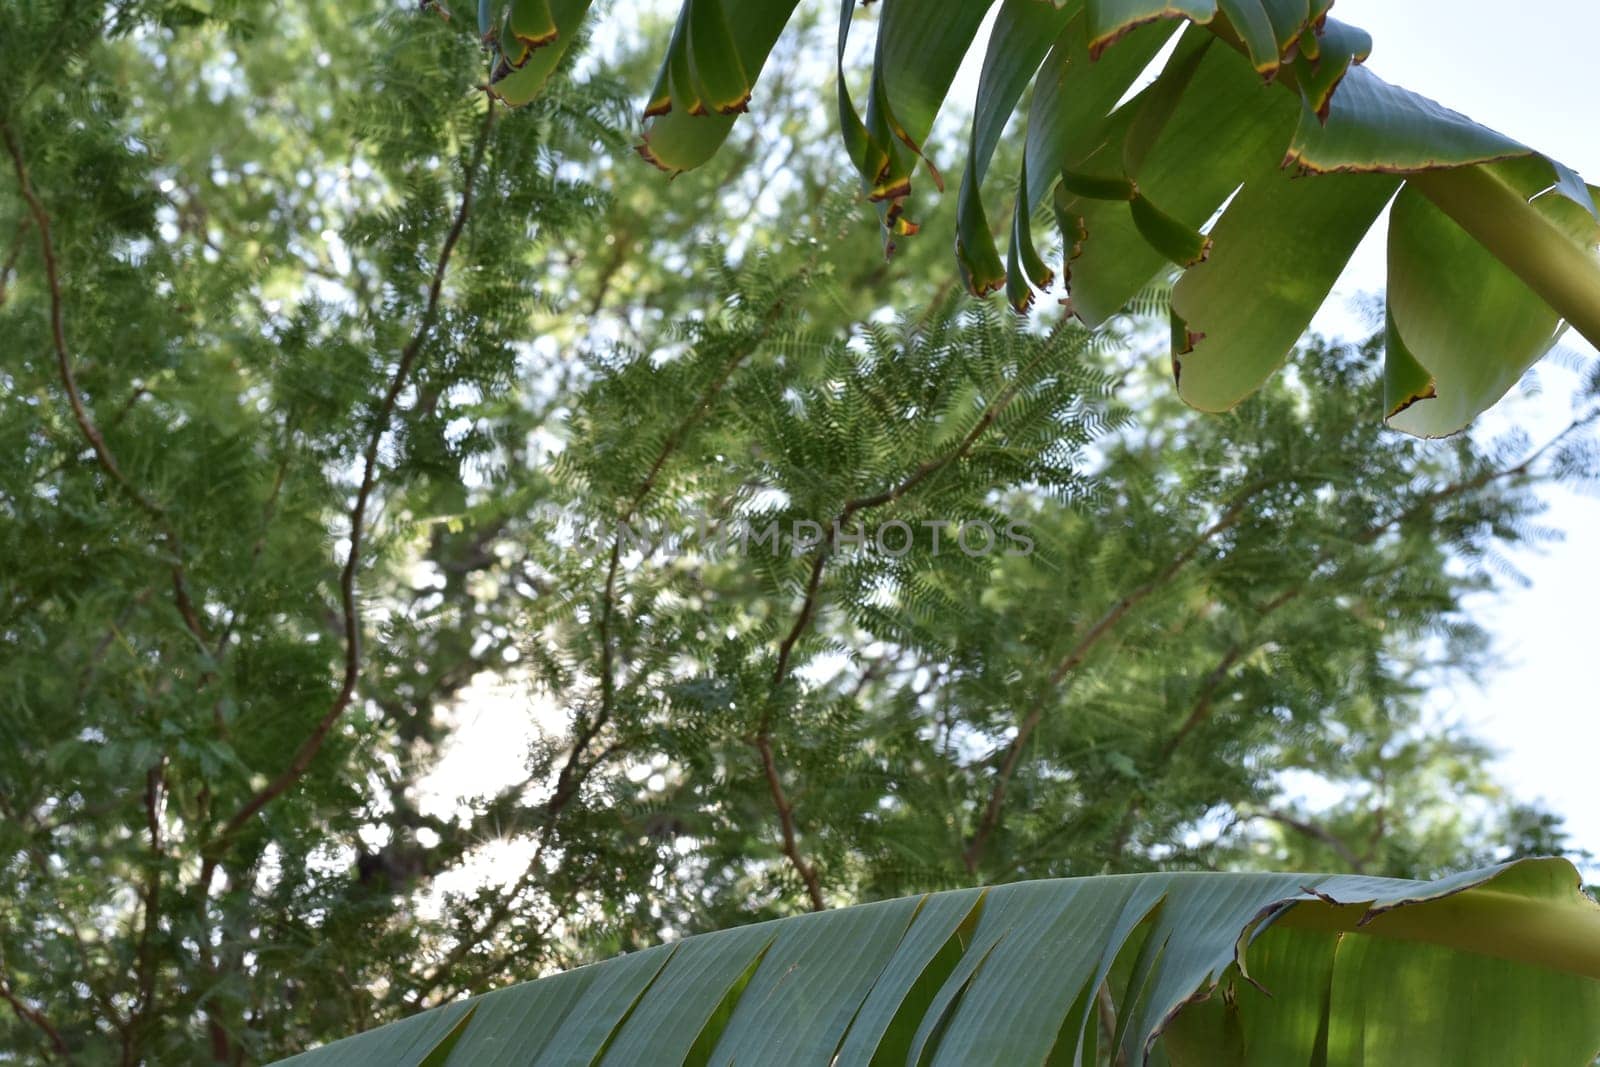 Banana Tree and Mesquite Leaves Shading Arizona Backyard. High quality photo